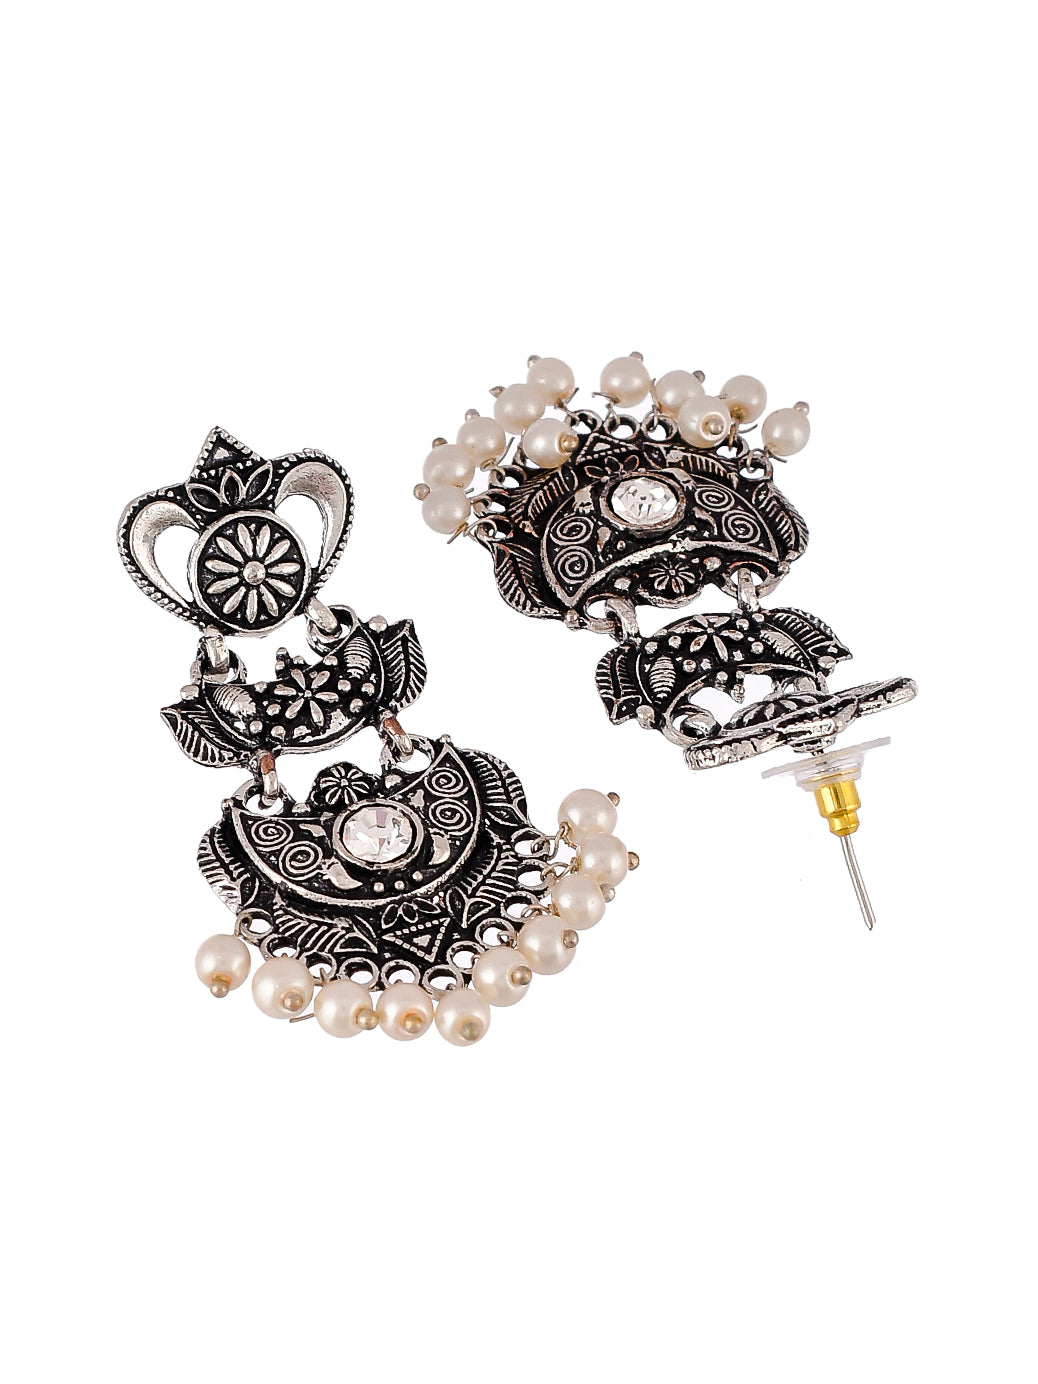 Oxidised Silver plated Chandbali Earrings